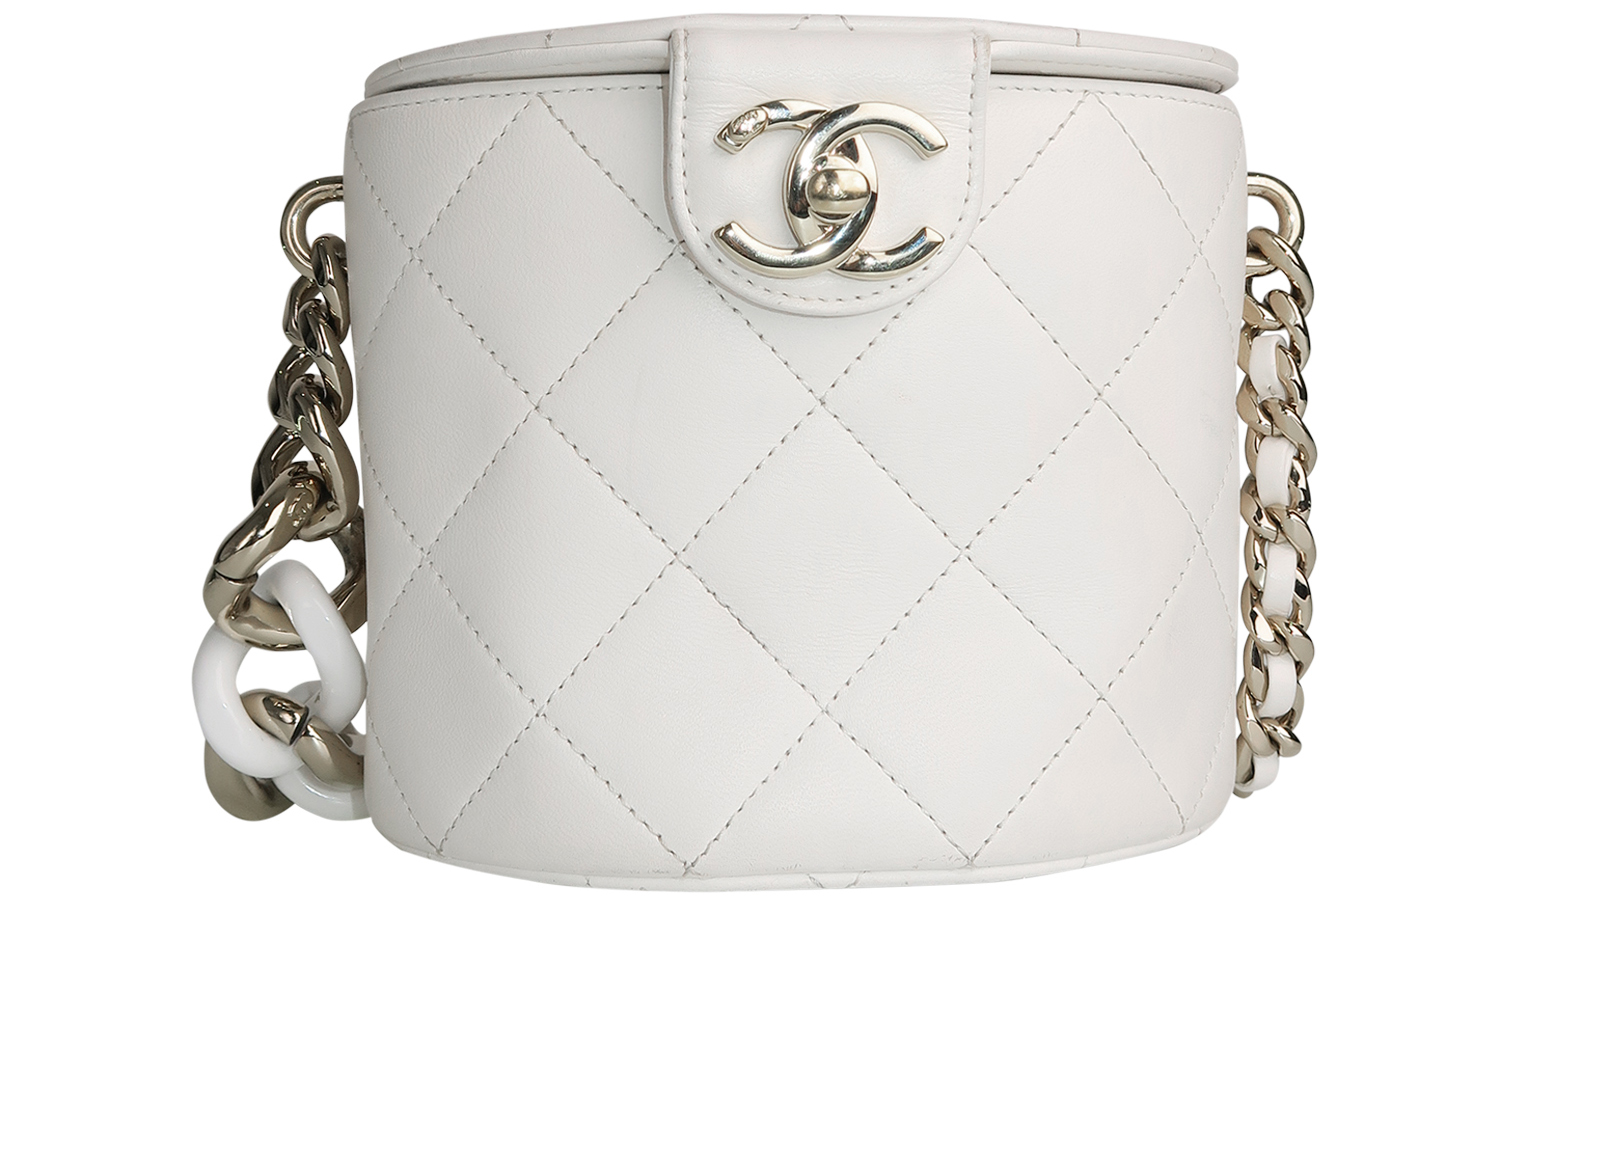 Chanel Vanity Round Bag